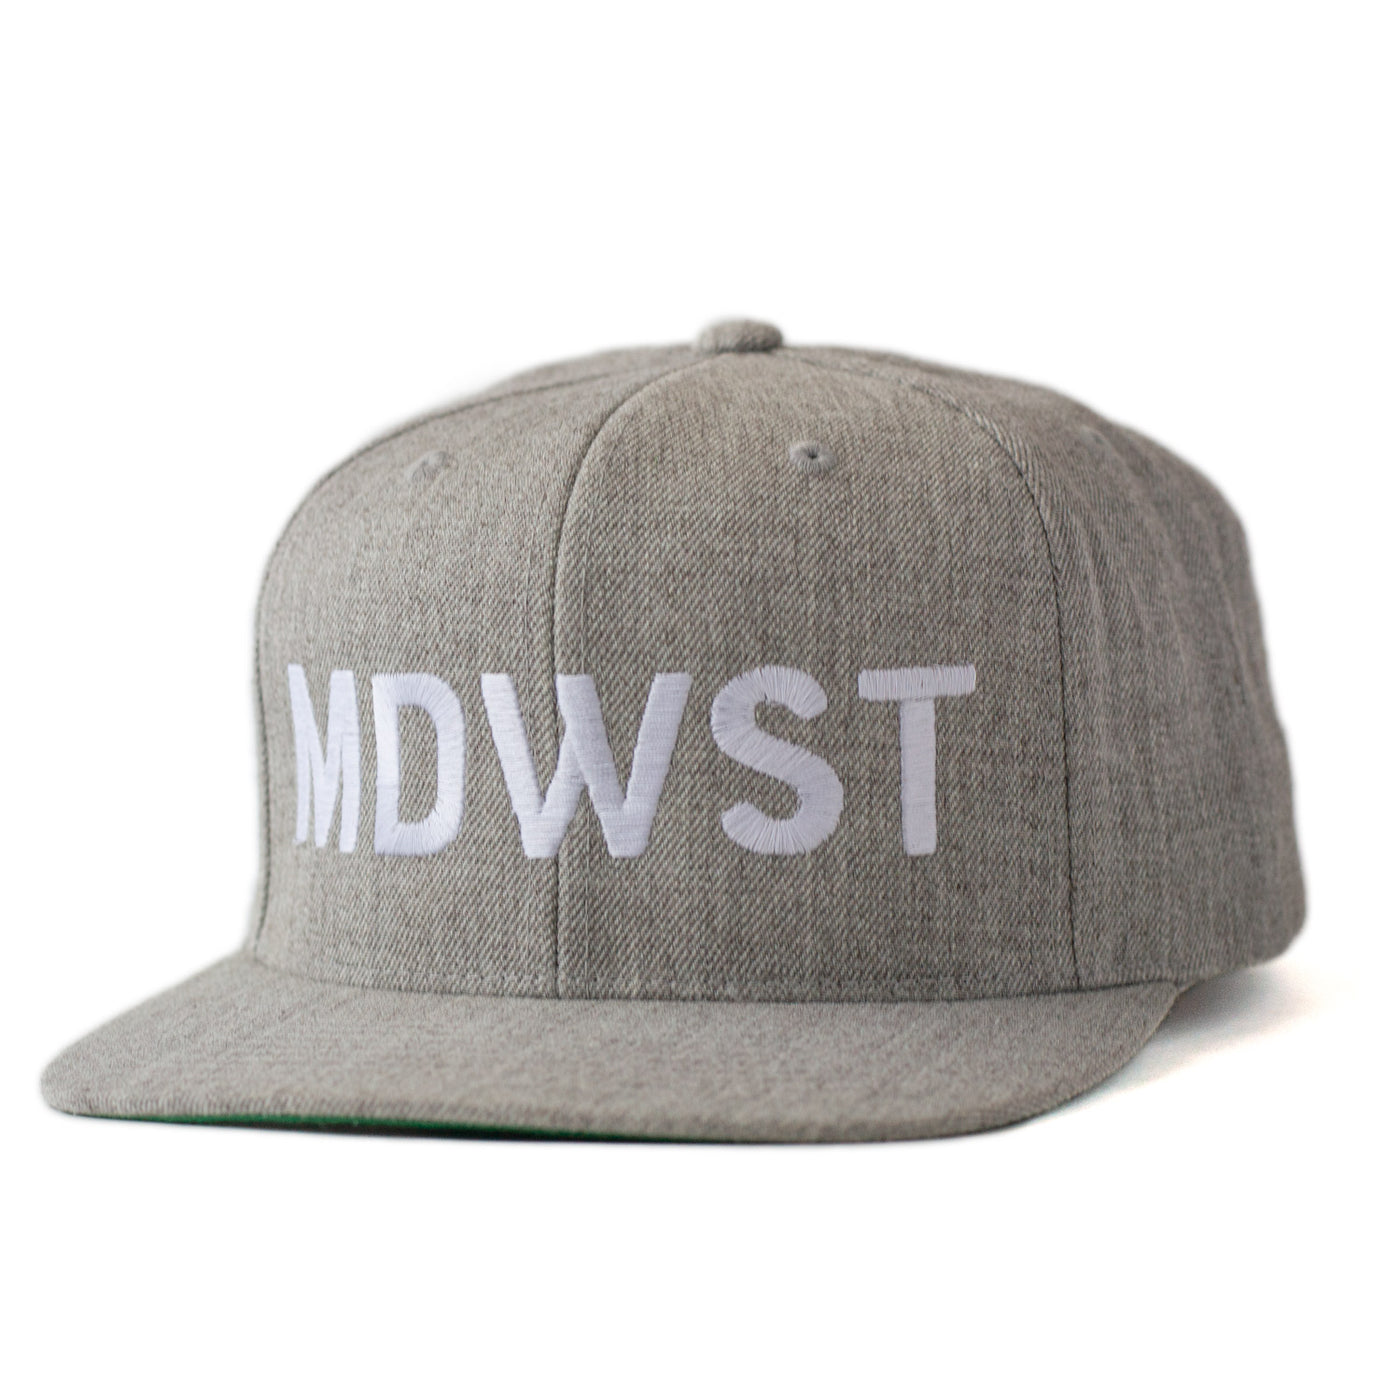 MDWST Snapback Cap